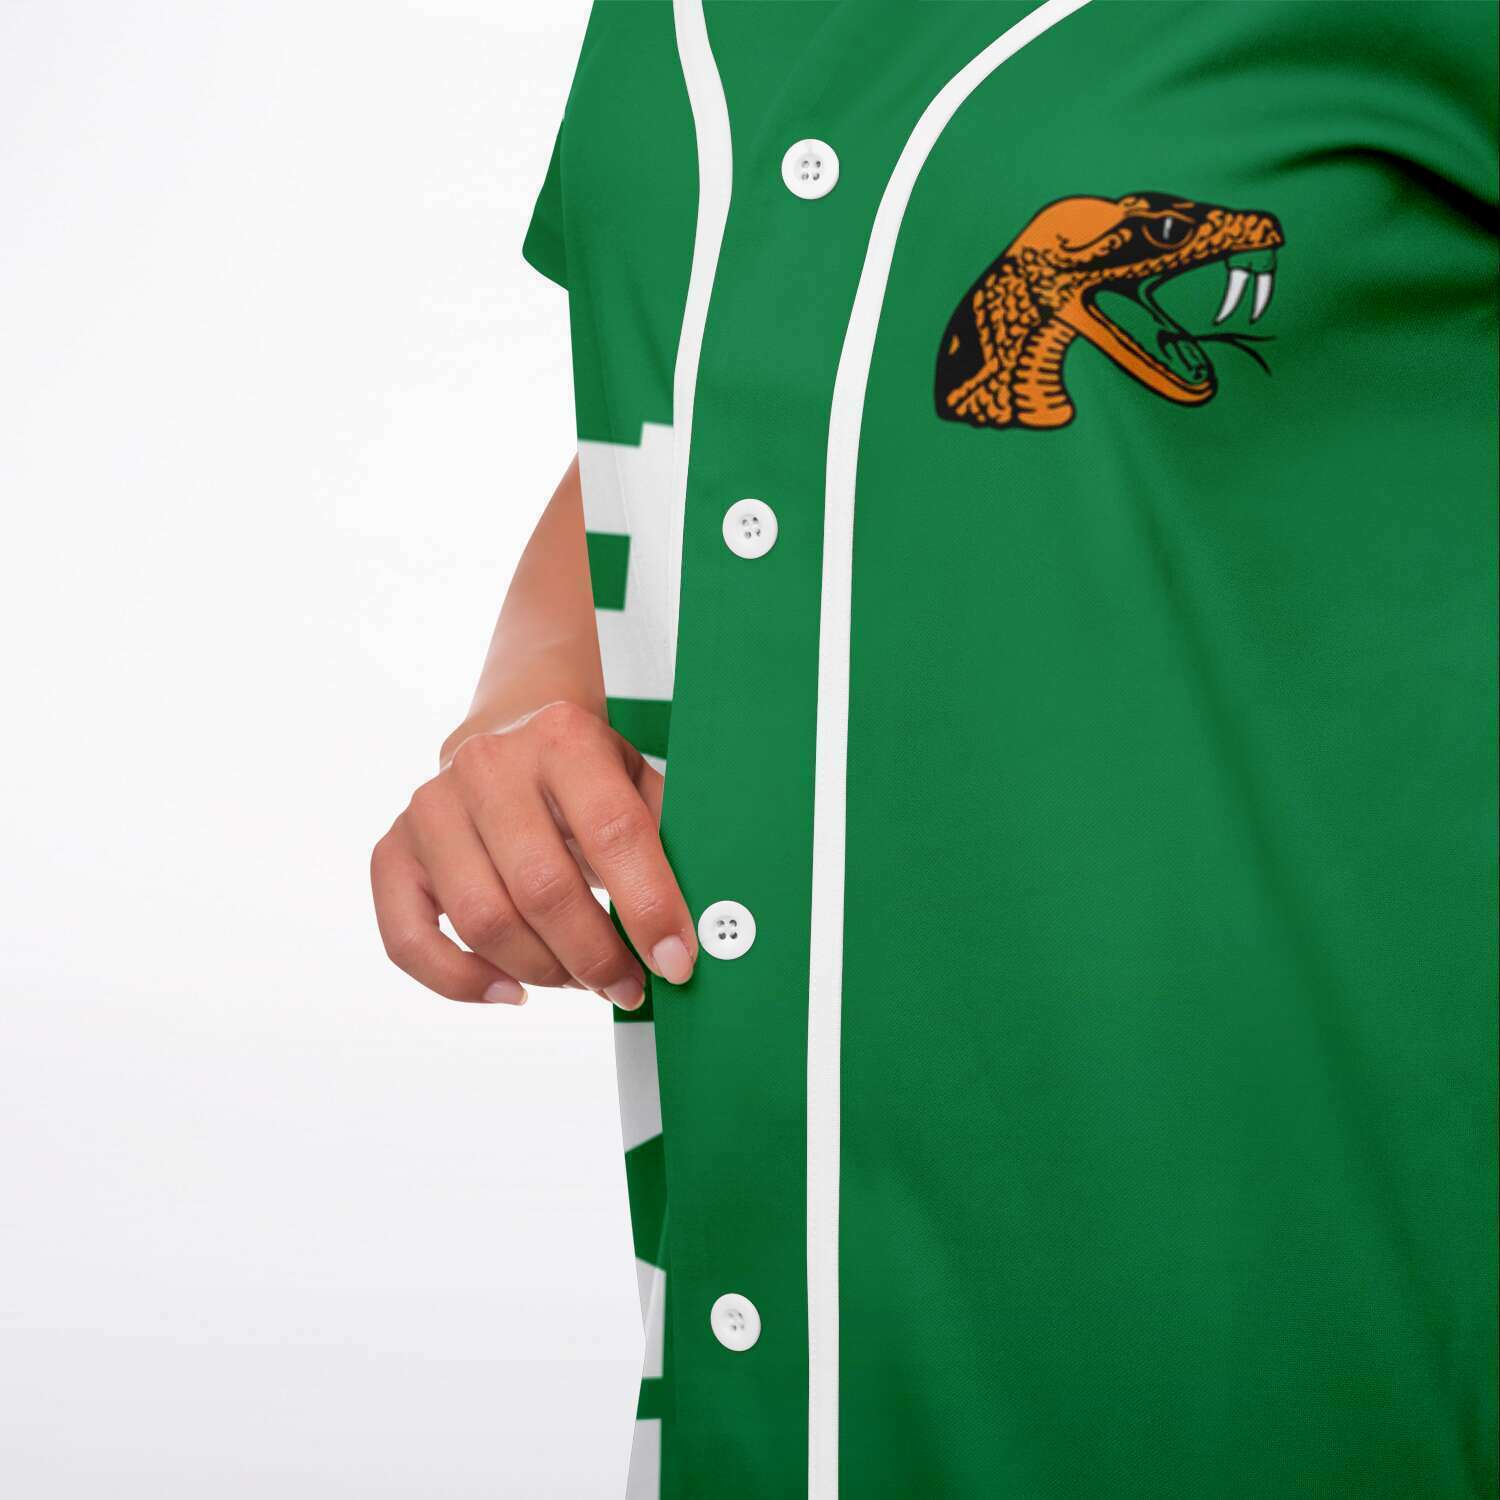 Grambling Tigers baseball jersey dress v4329 - joxtee